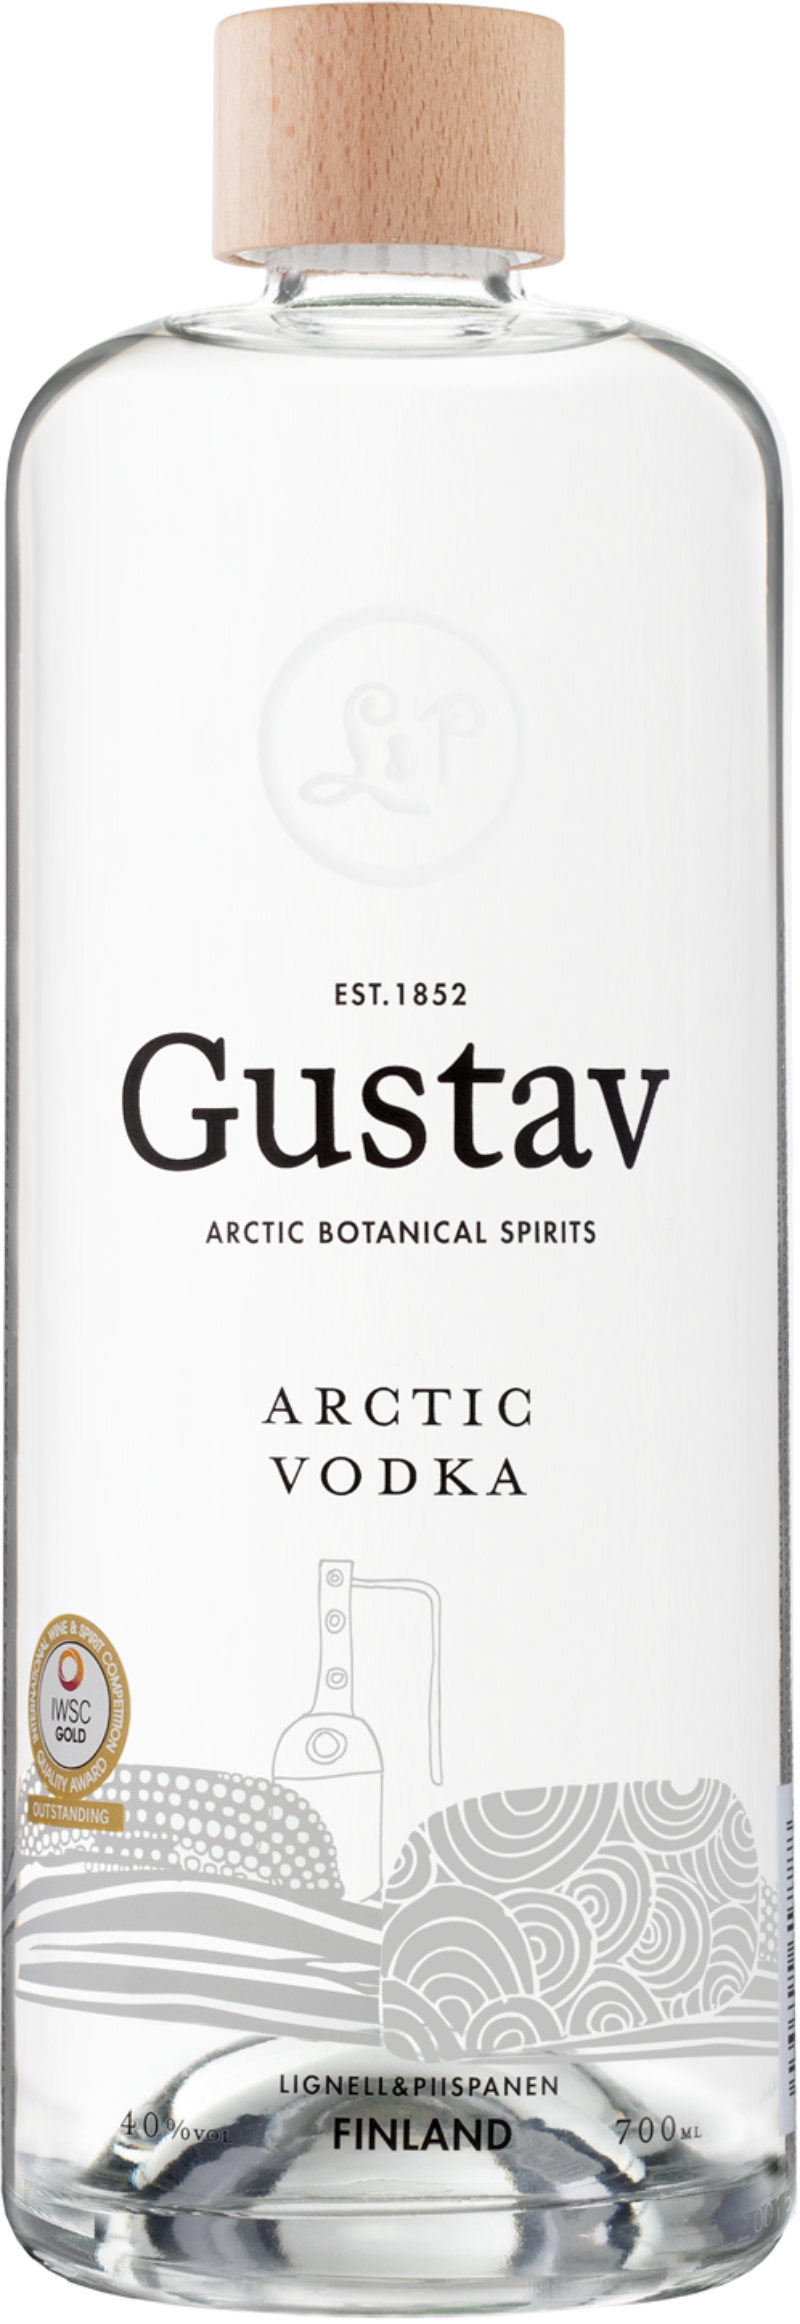 Gustav - 70 cl Vodka Arctic vol 40